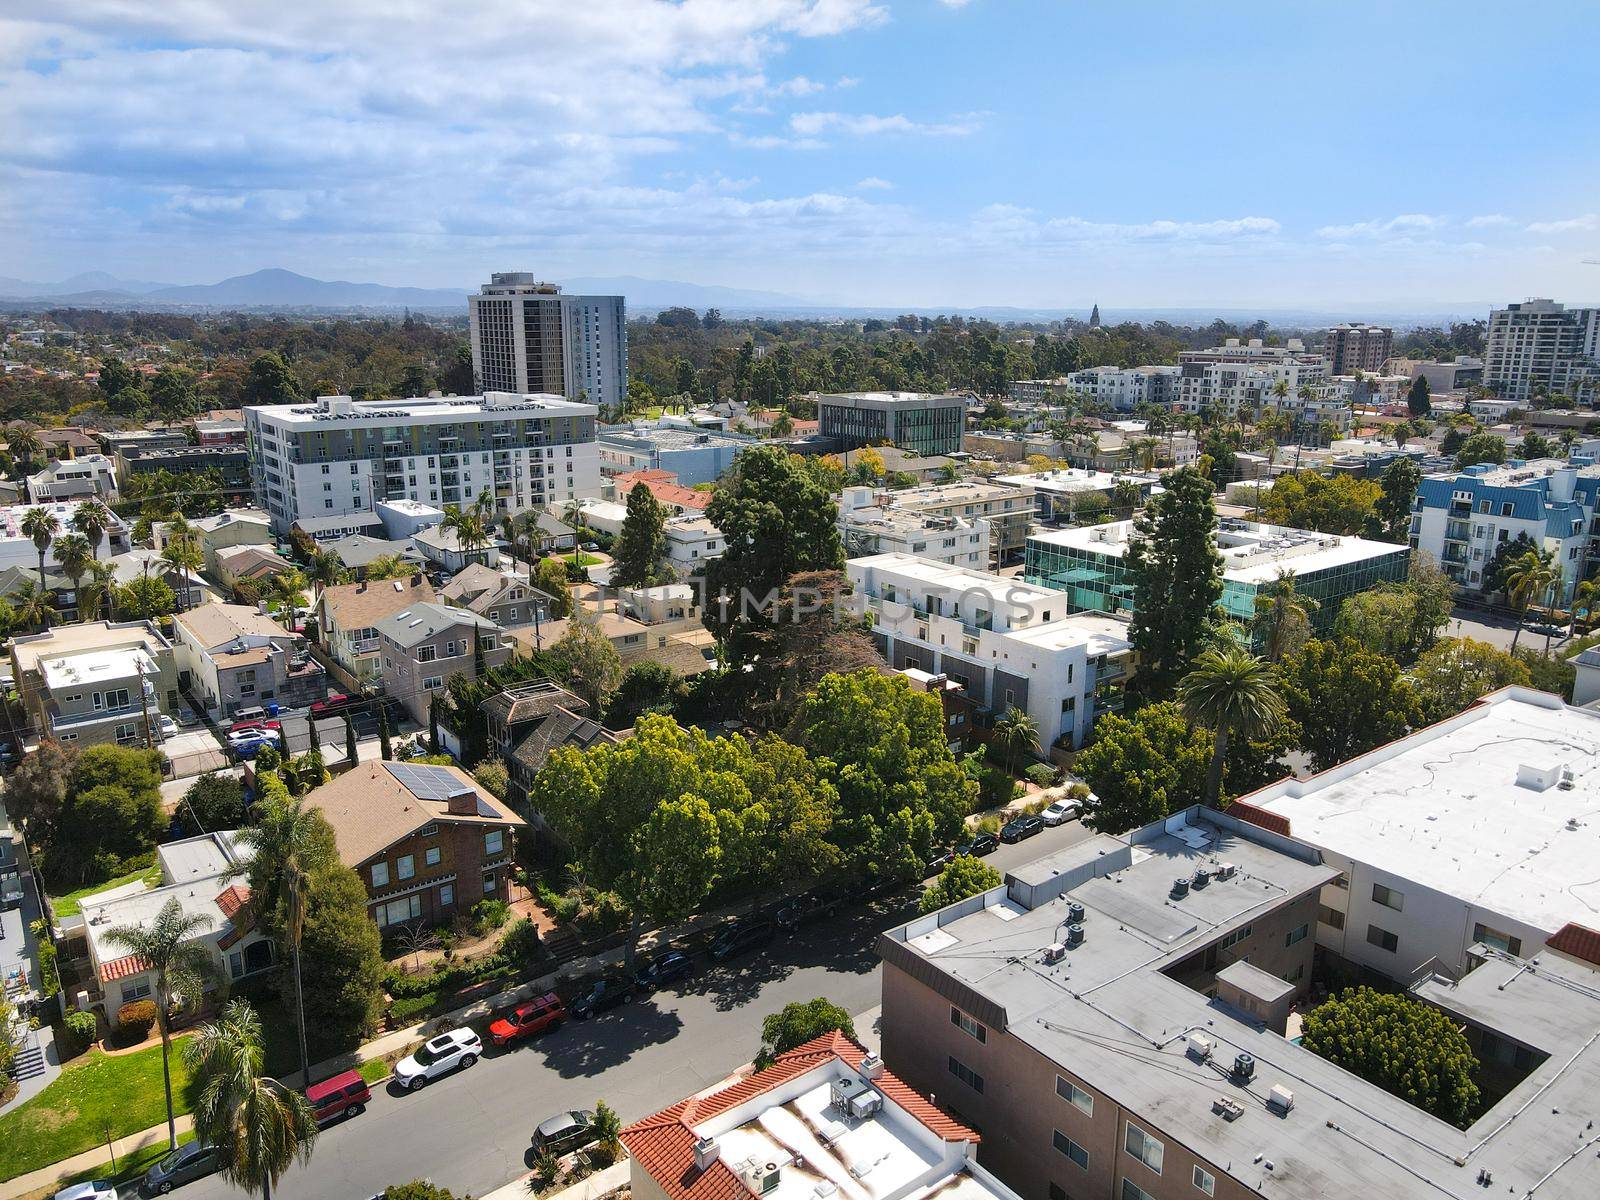 Aerial view above Hillcrest neighborhood in San Diego by Bonandbon